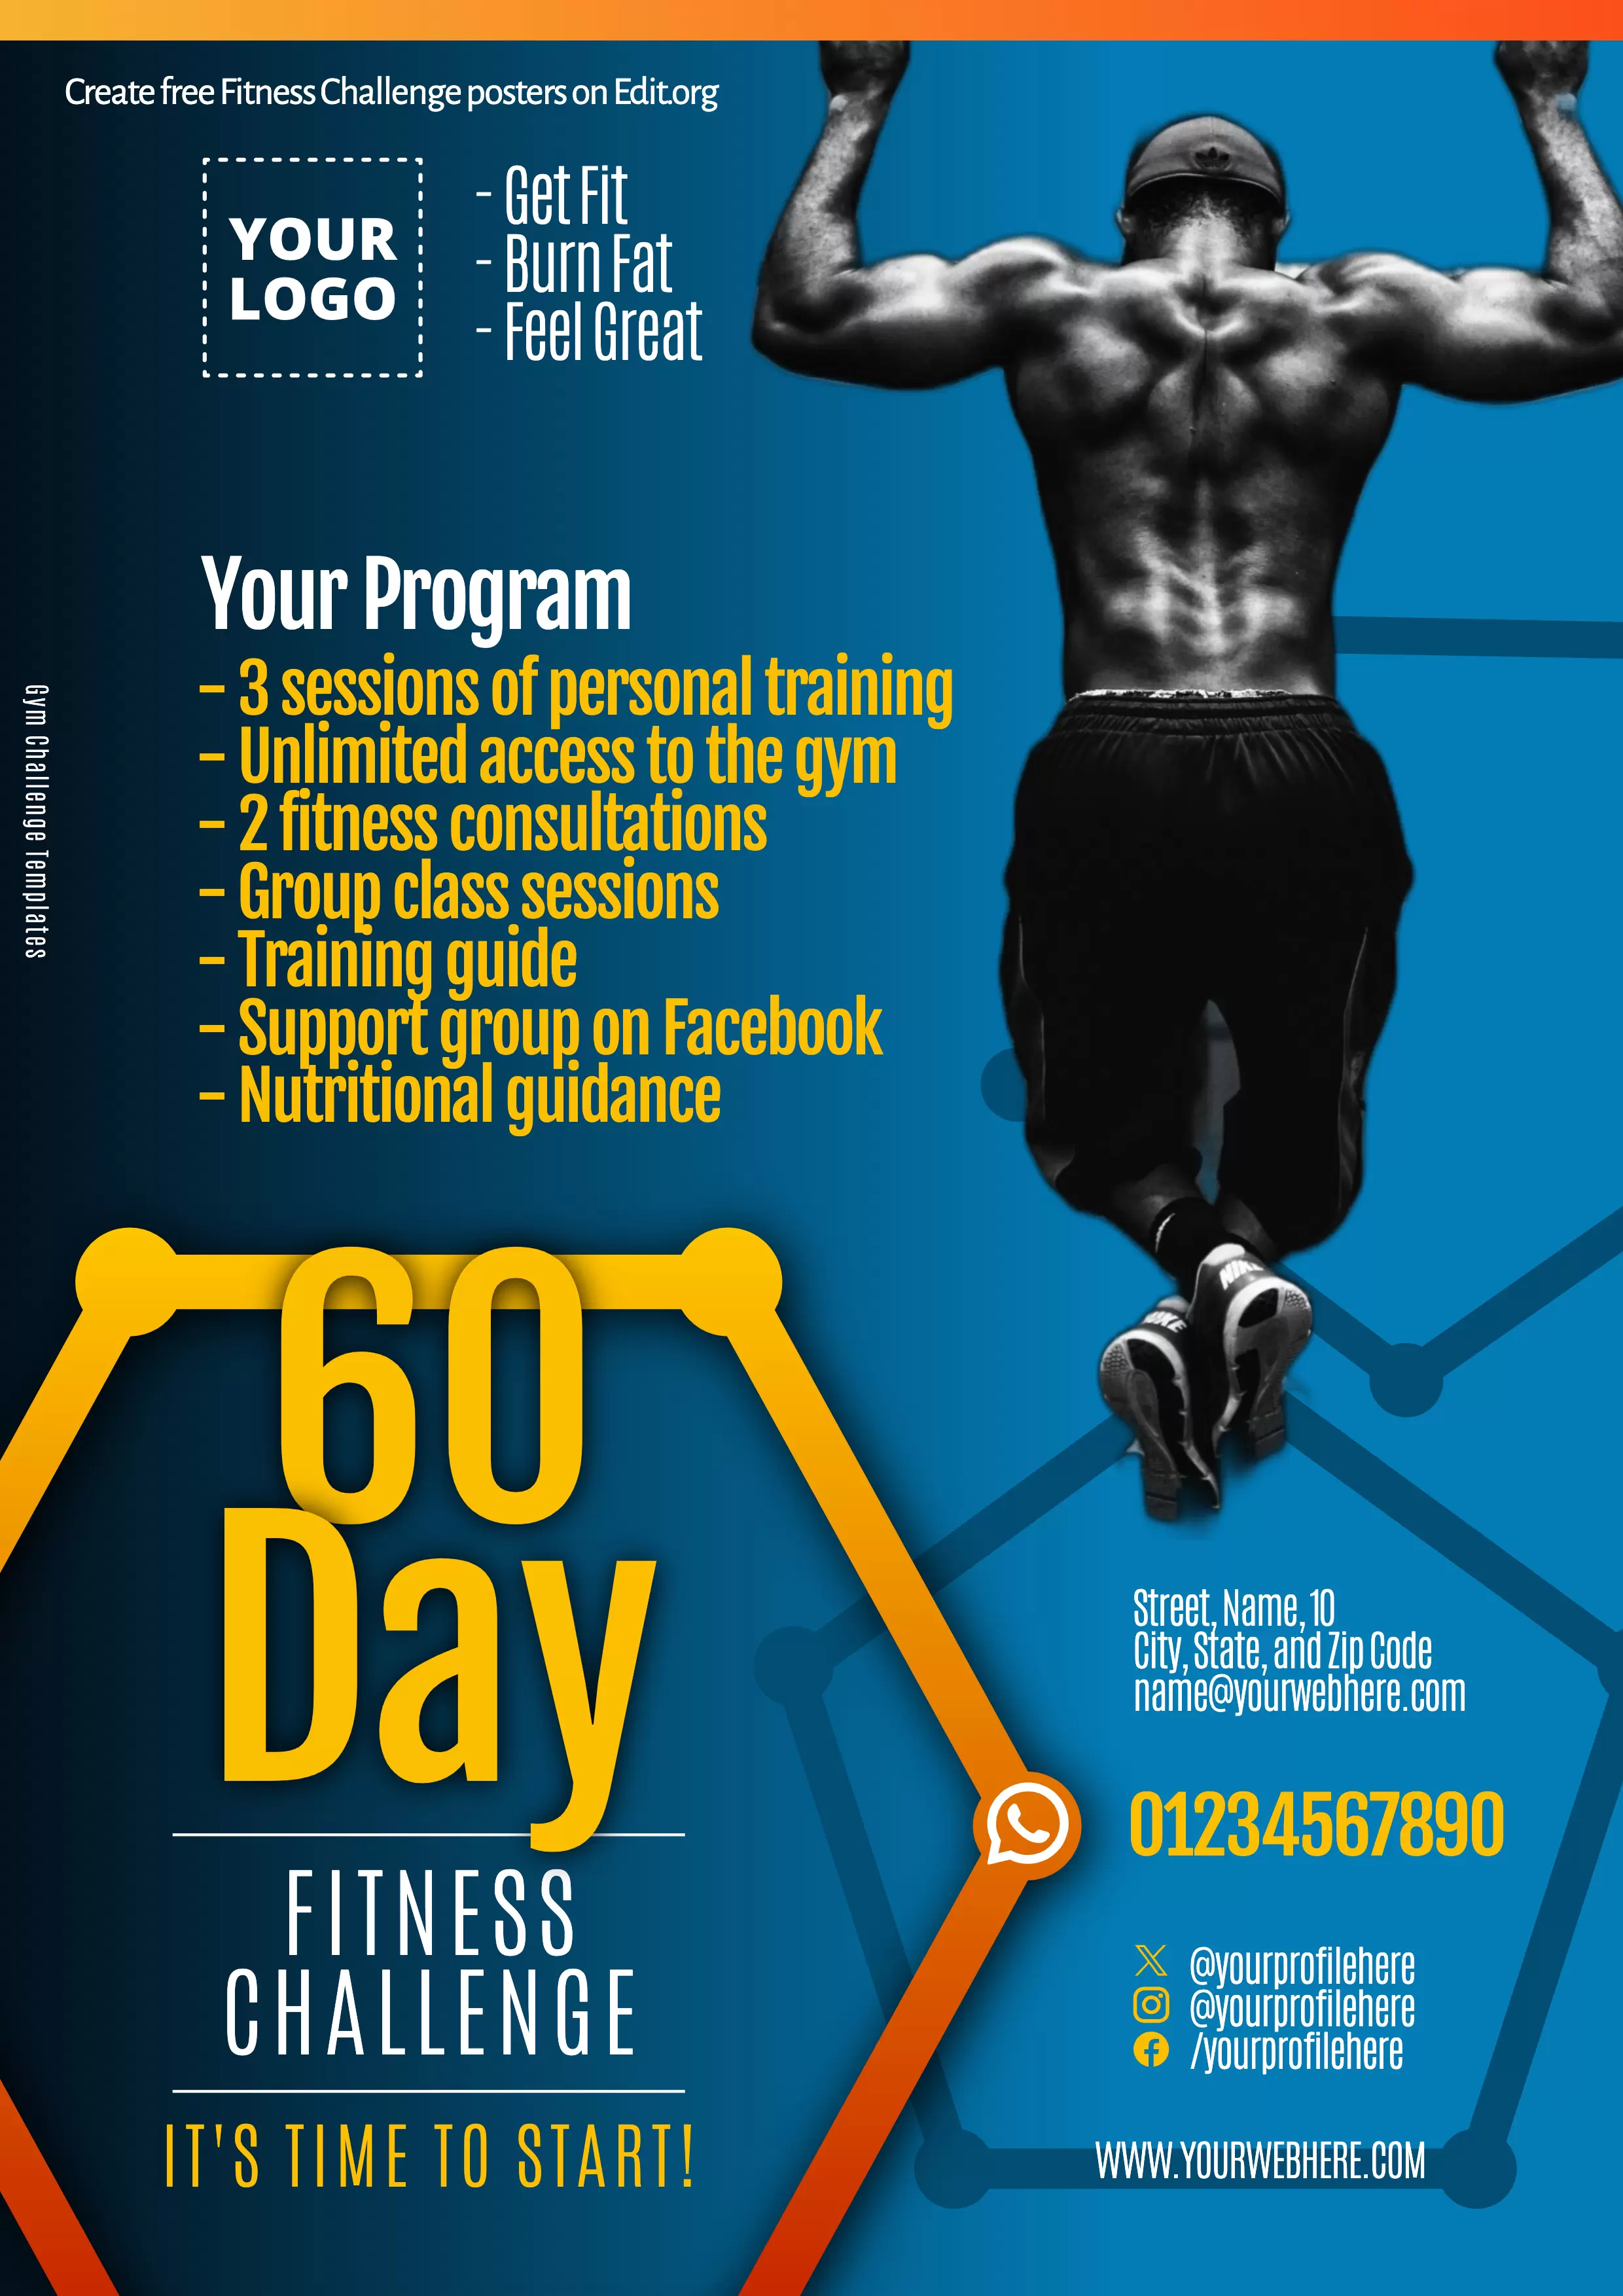 https://edit.org/img/blog/n/b6v-1024-challenge-fitness-gym-poster-template.webp